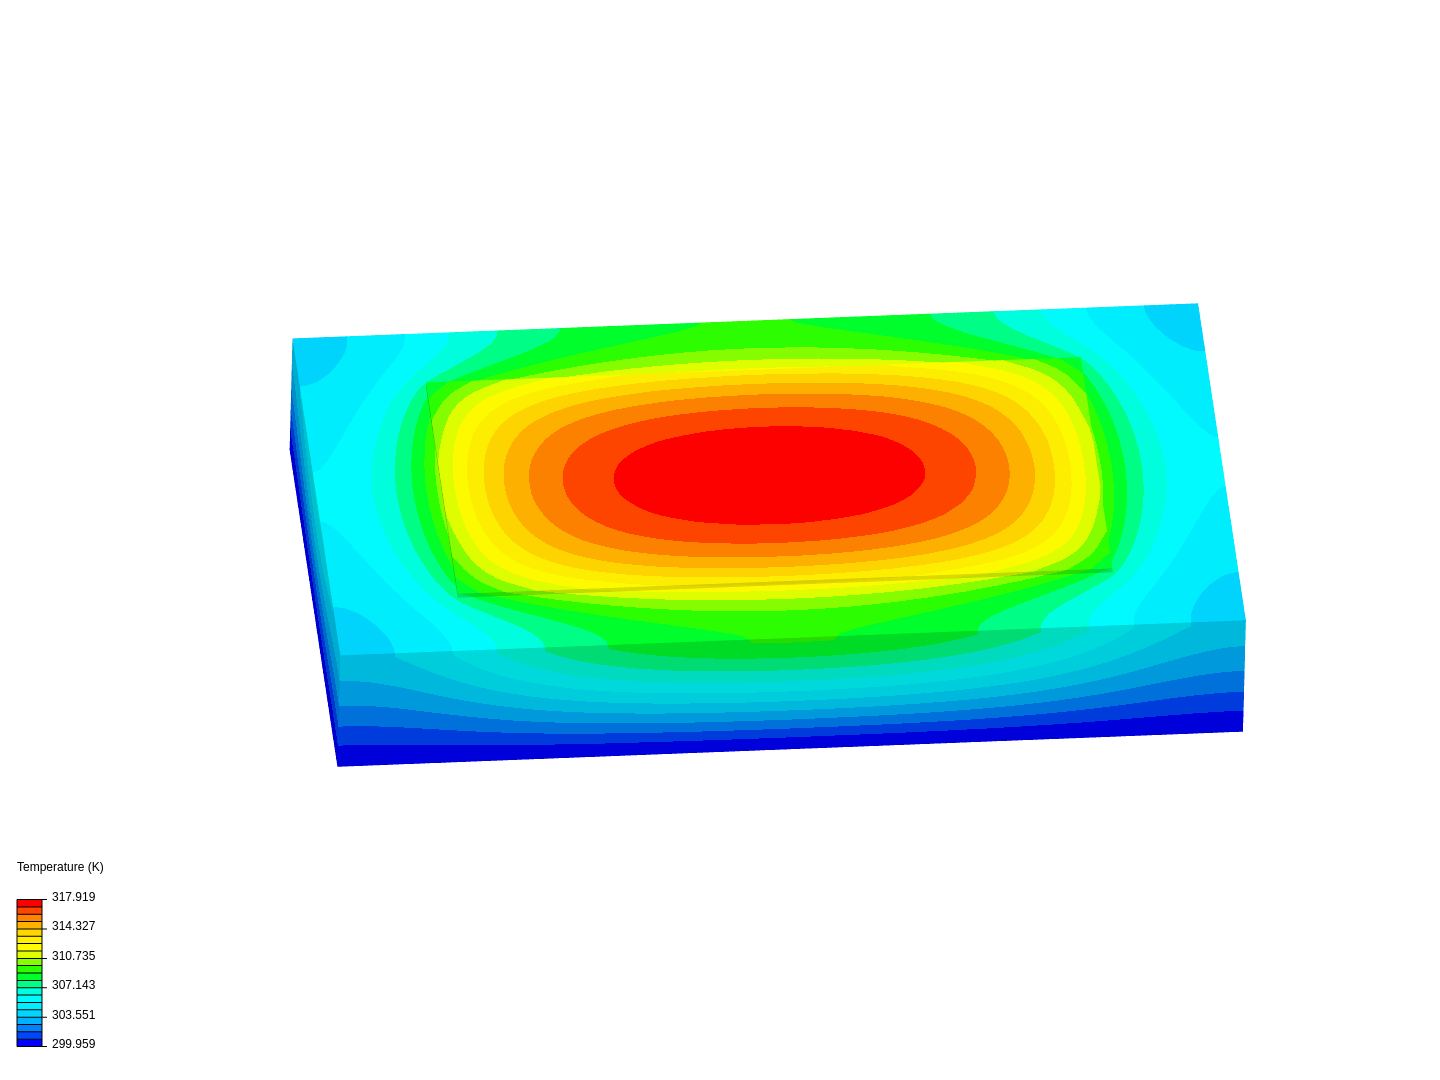 PCB thermal comparison image